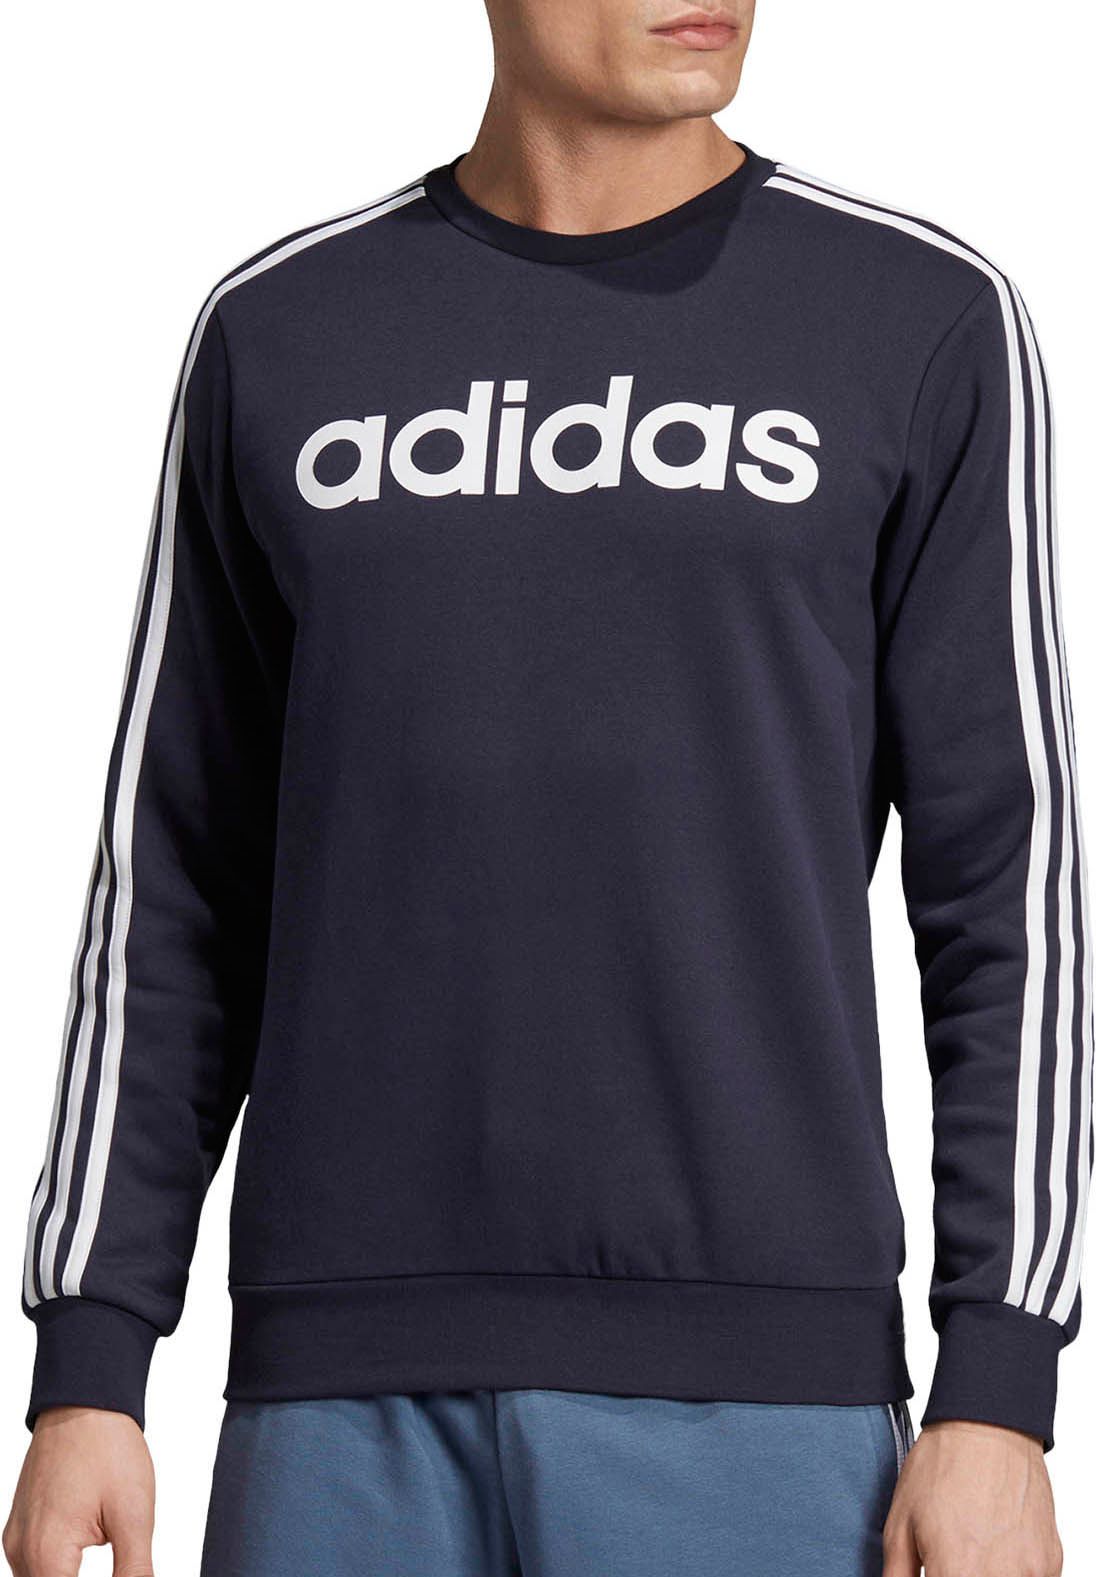 adidas sweatshirt the brand with 3 stripes